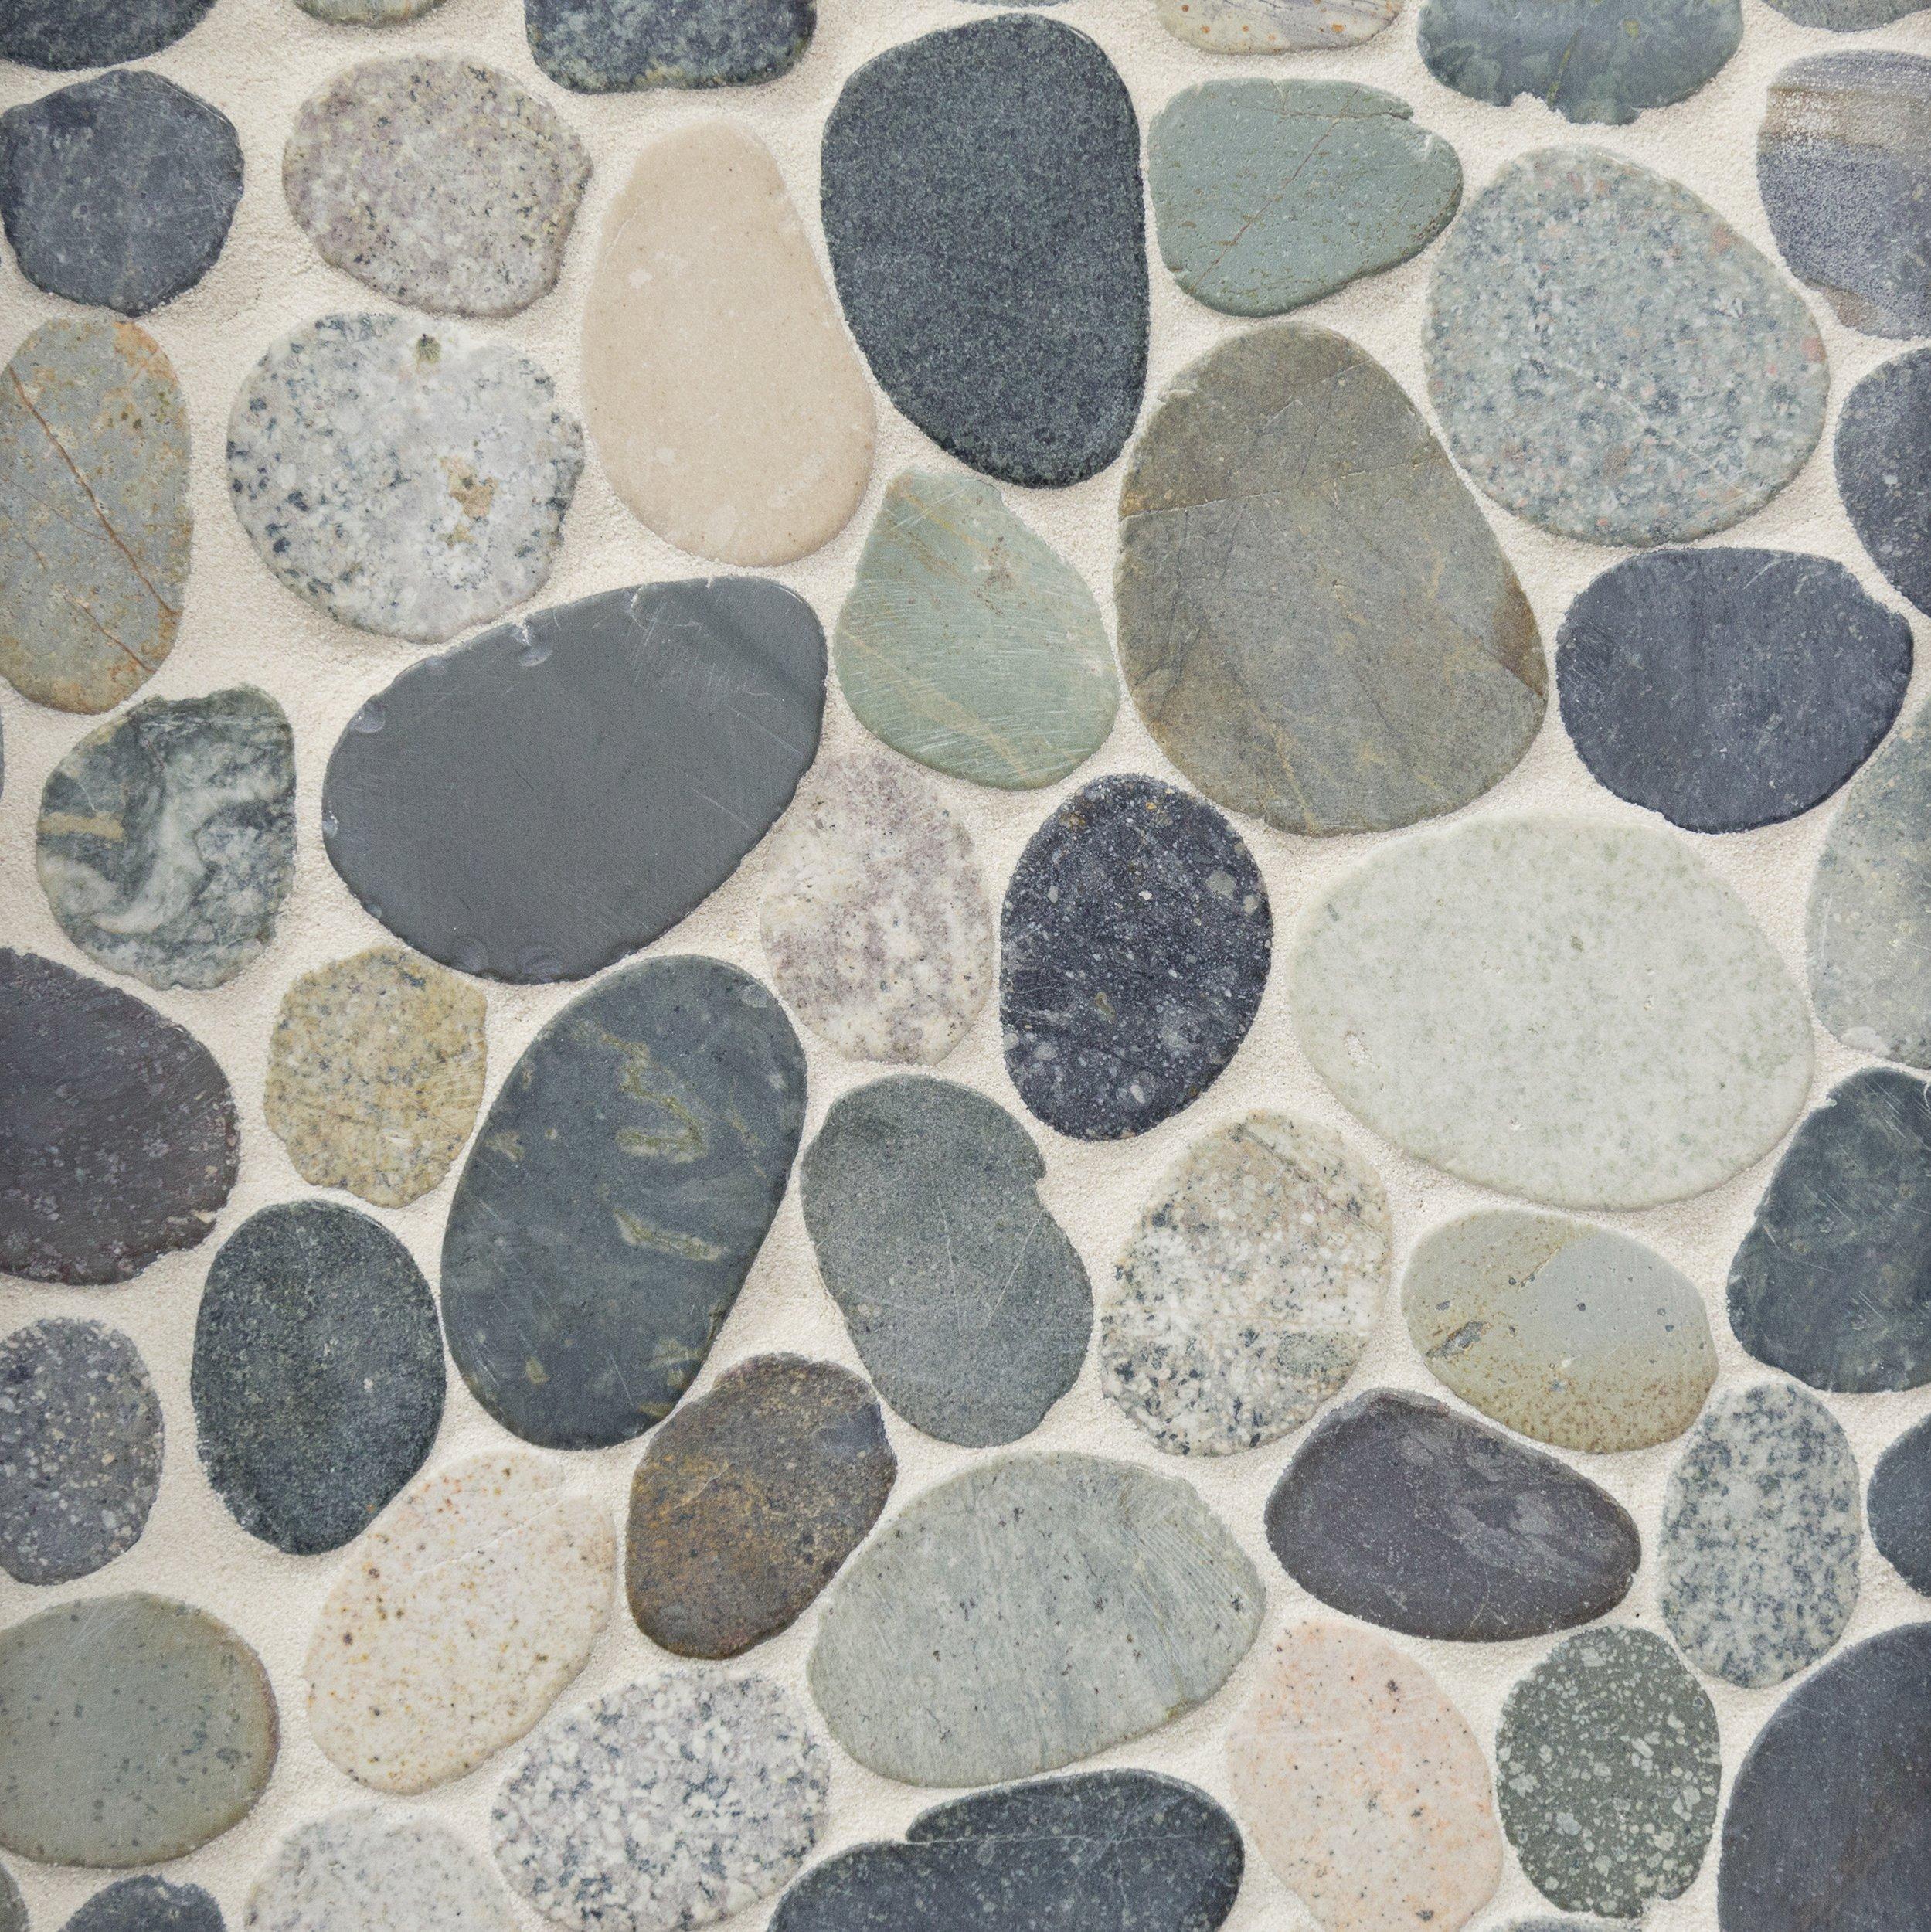 Kayan River Pebble Mosaic Floor And Decor, Pebble Tile Mosaics